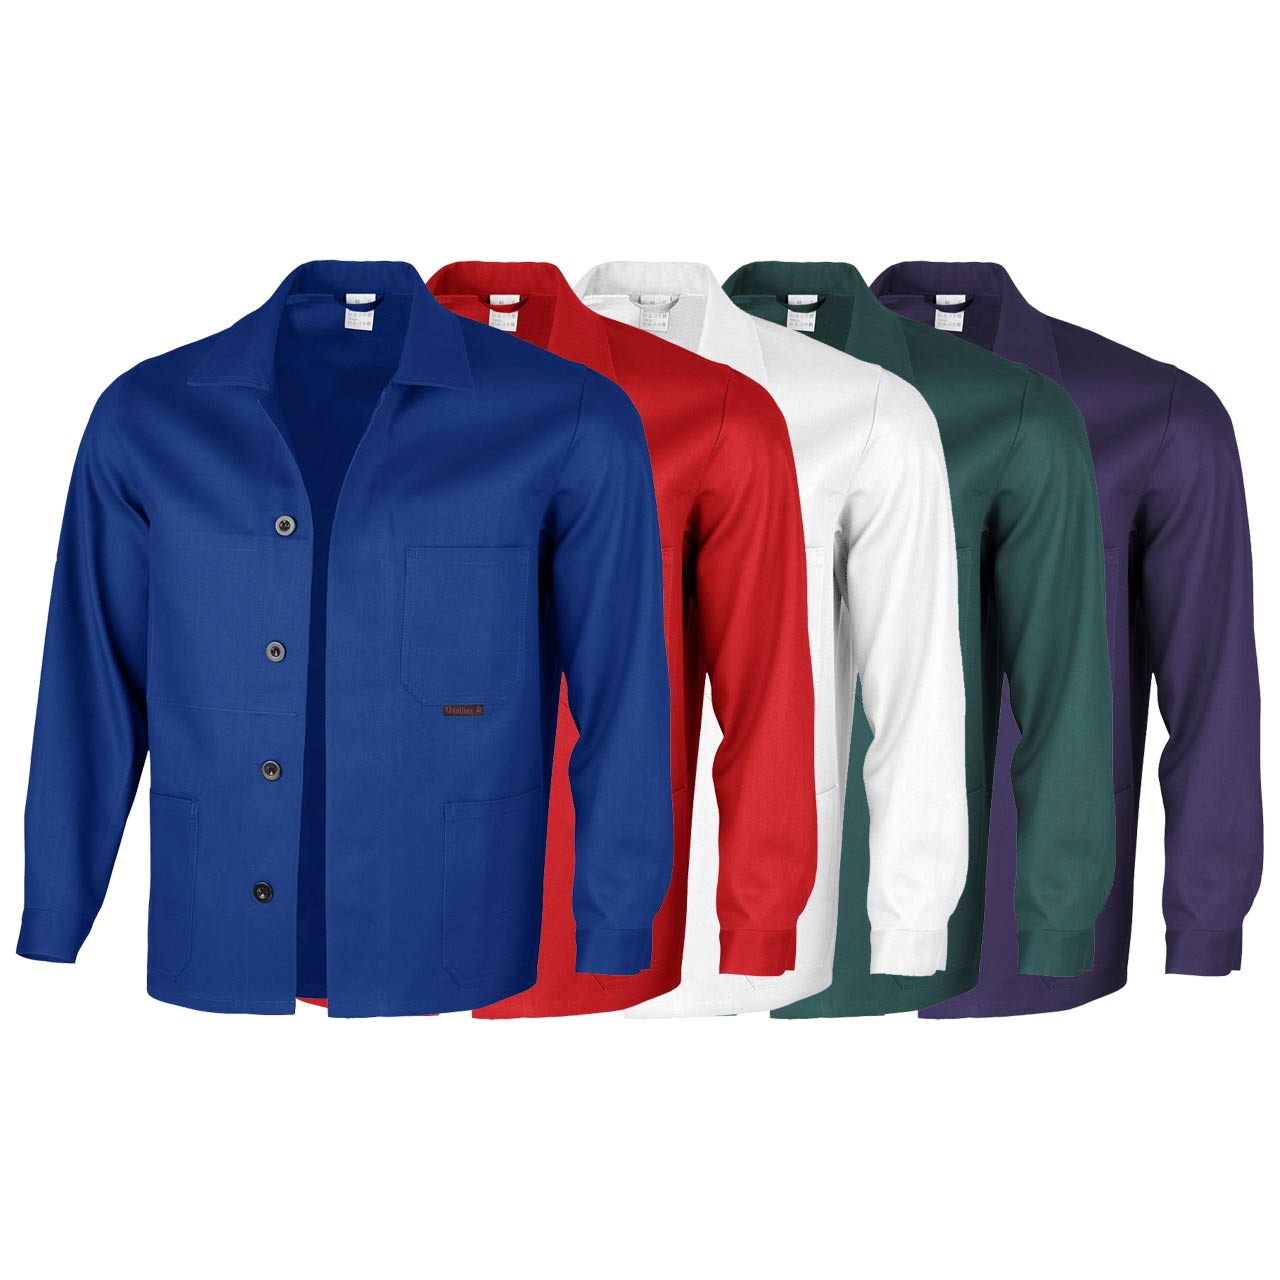 Qualitex Bundjacke "classic" 100% Baumwolle Jacke Berufsjacke NEU in 5 Farben